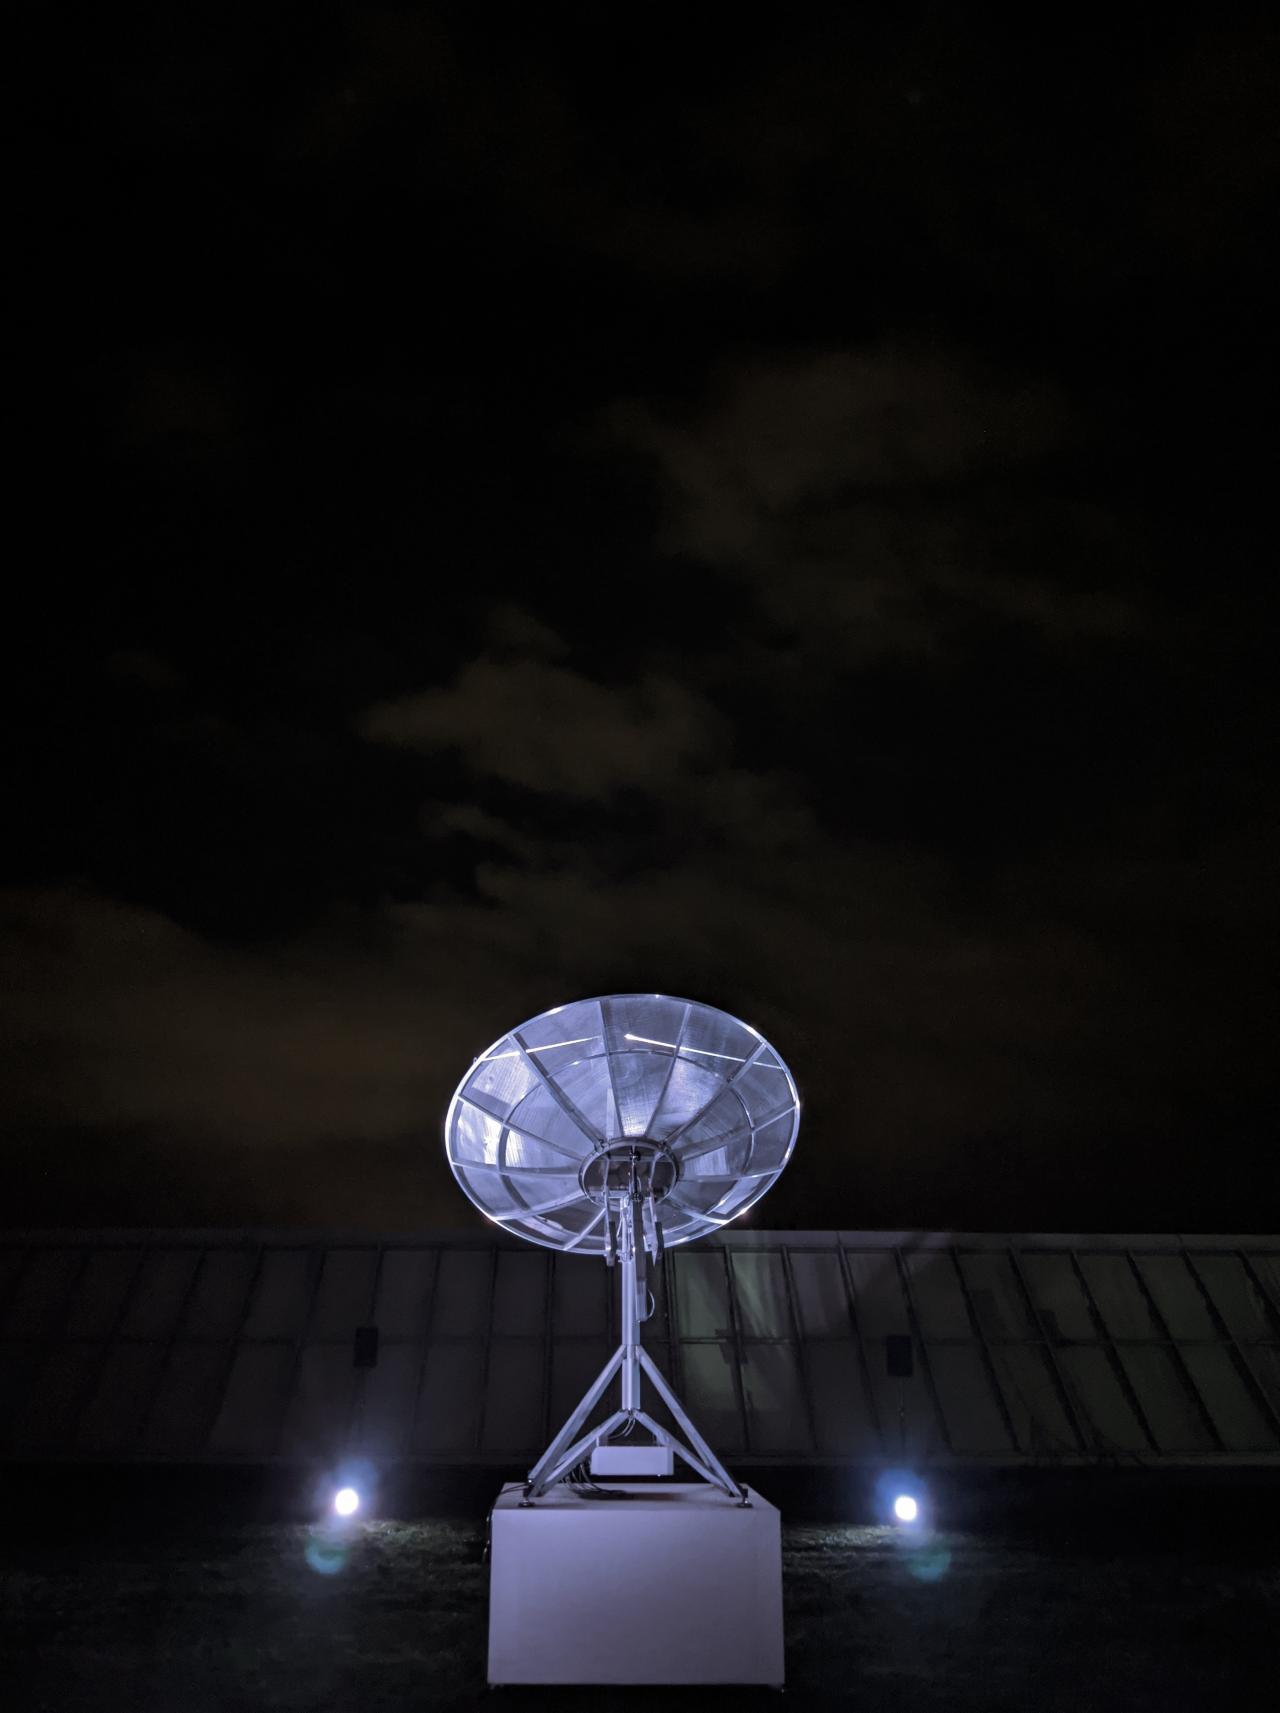 Radio telescope at night.